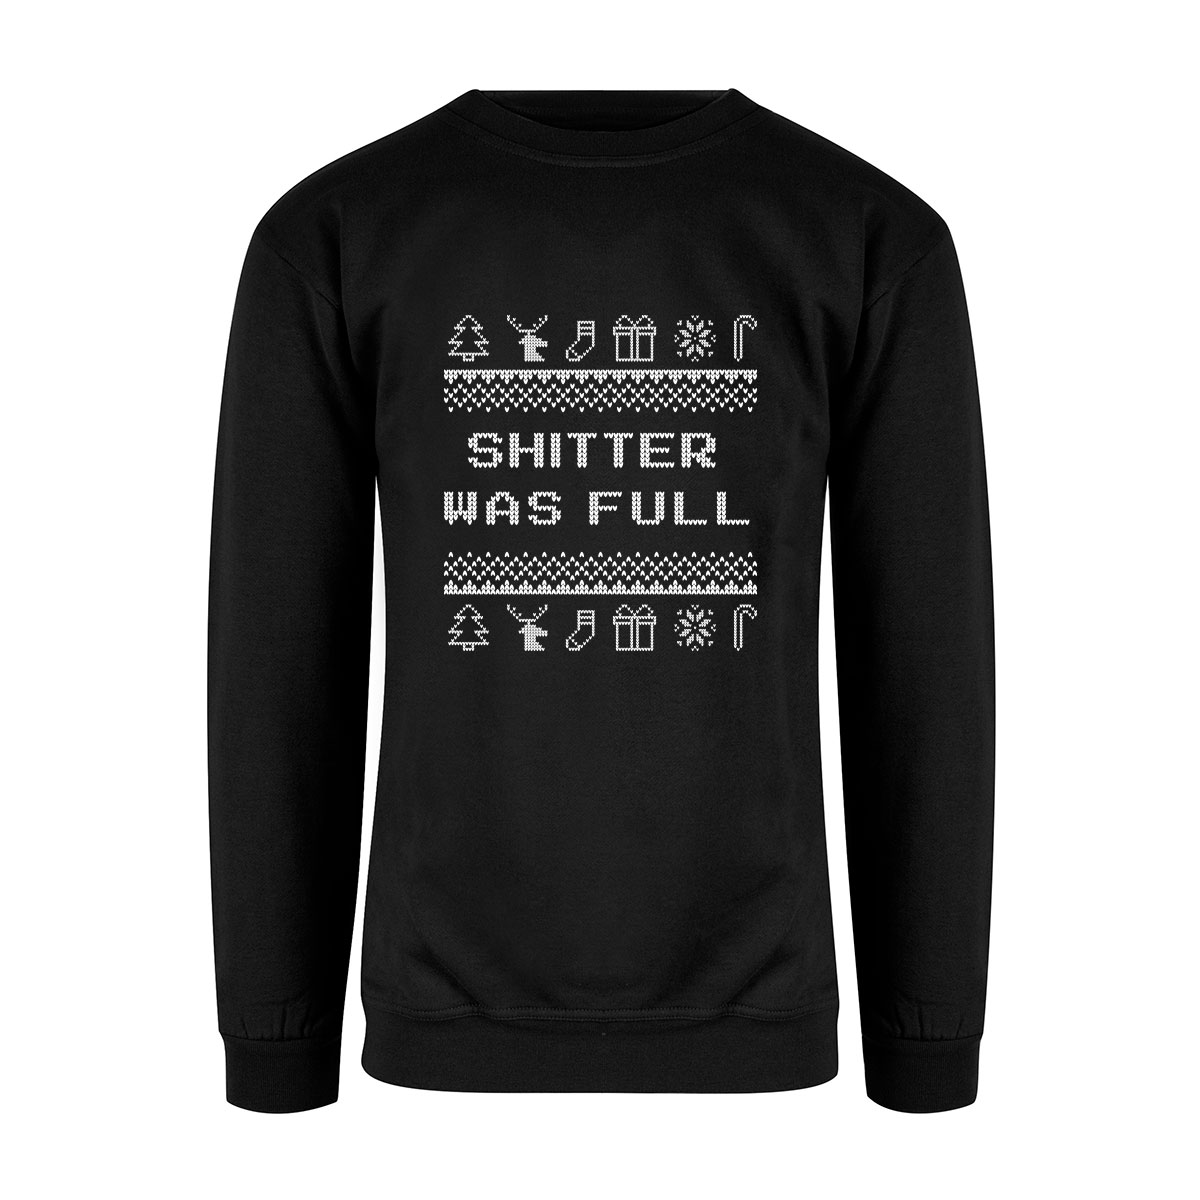 Svart sweatshirt med teksten "shitter was full" i hvitt på brystet